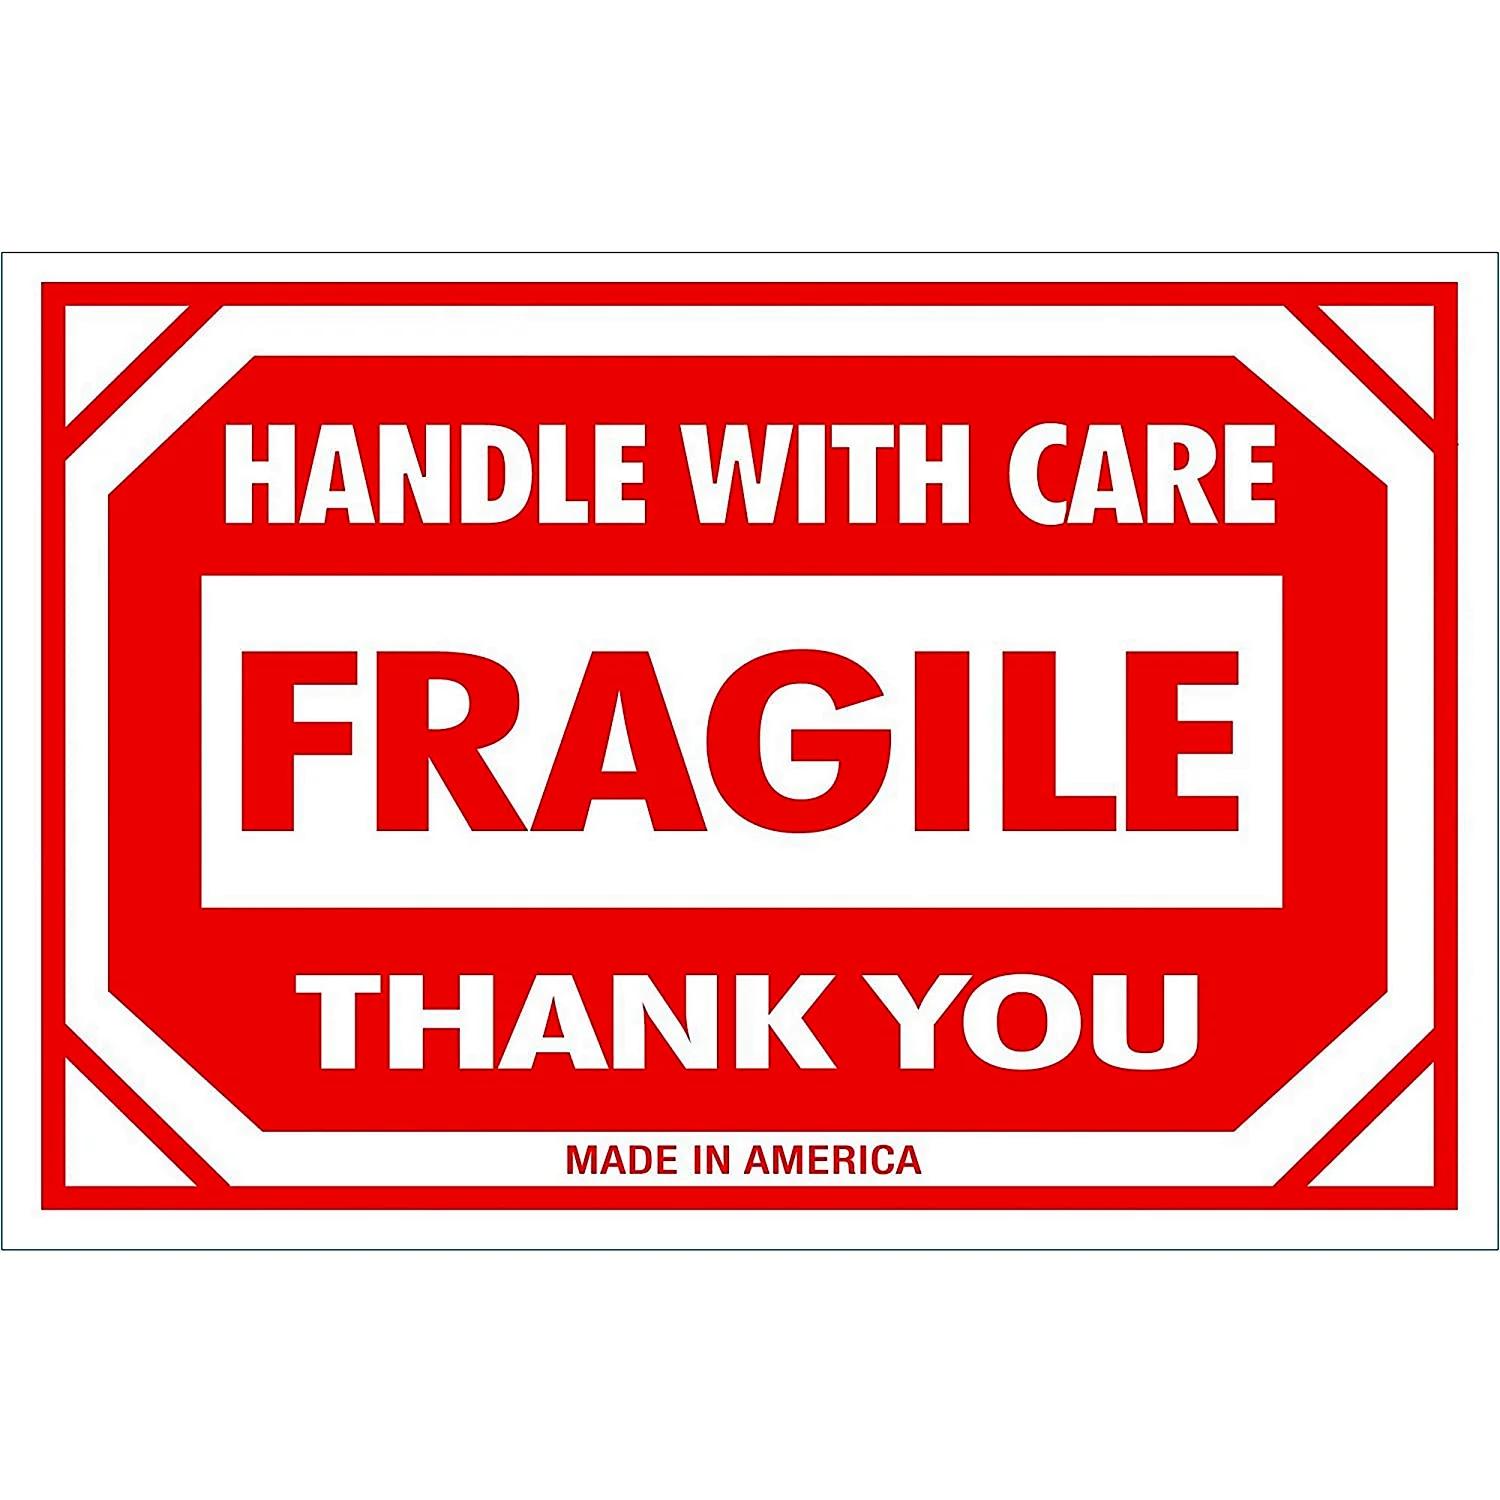 Fragile наклейка